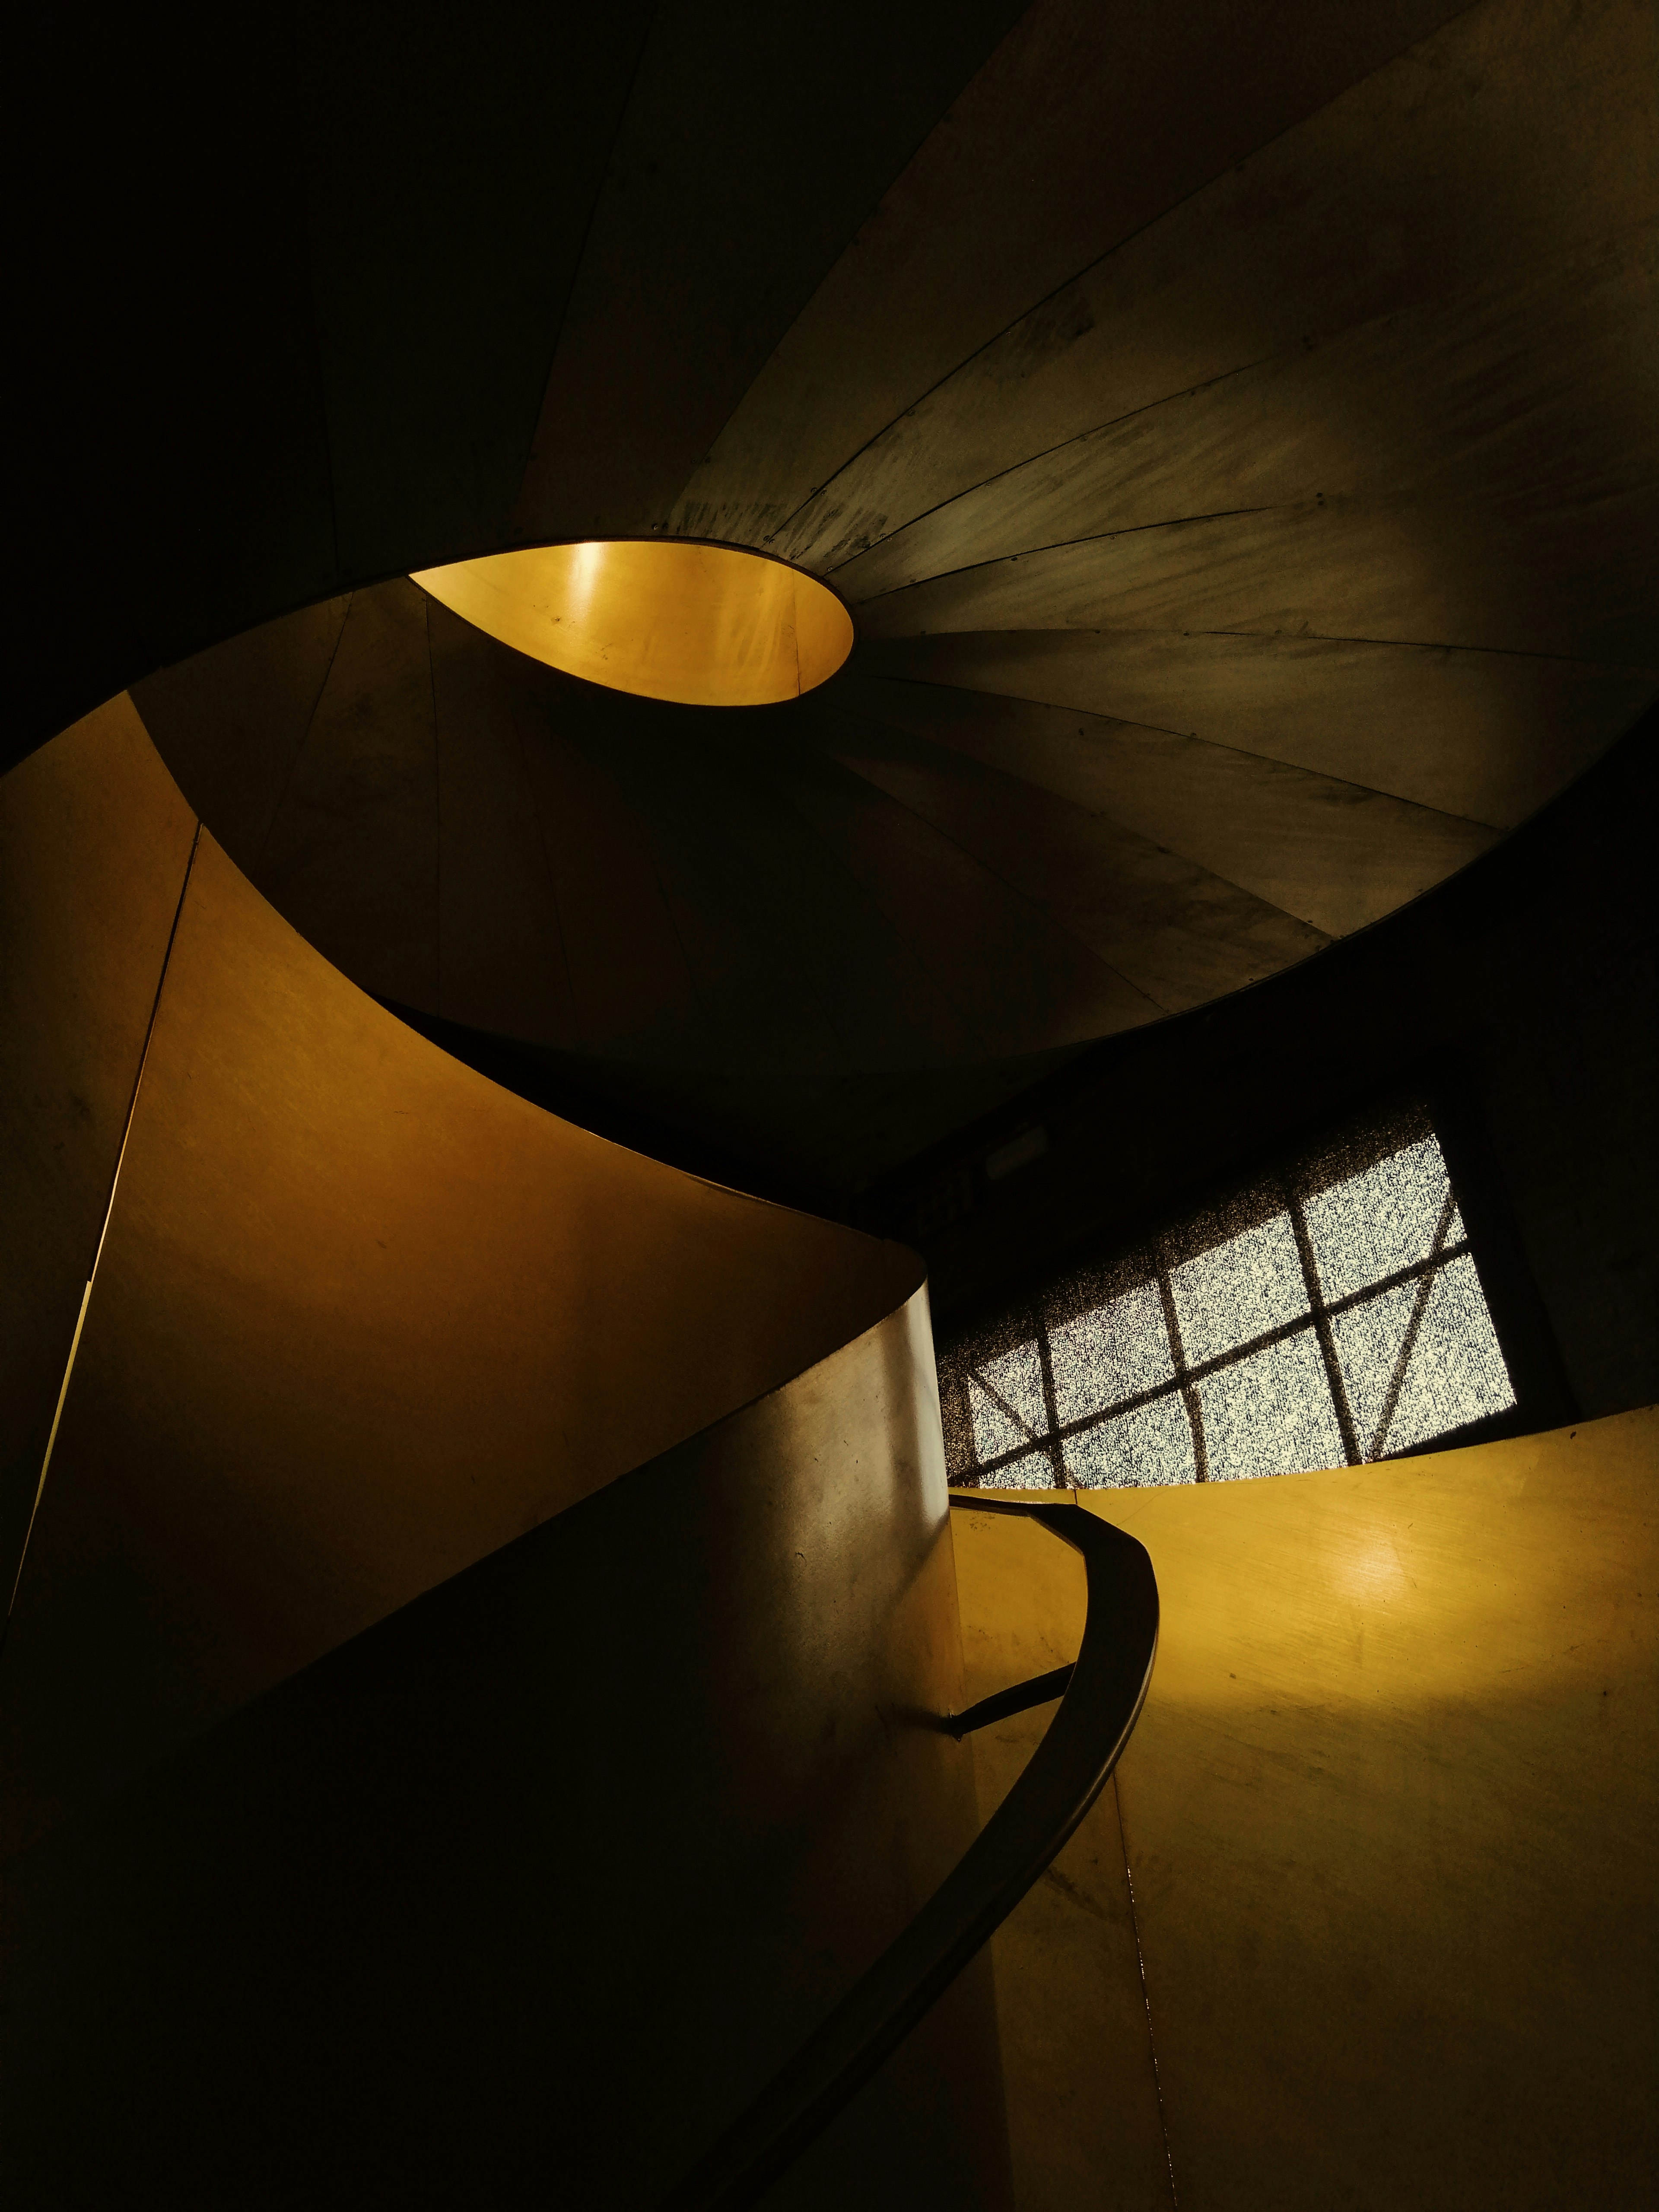 brown spiral staircase with black metal railings